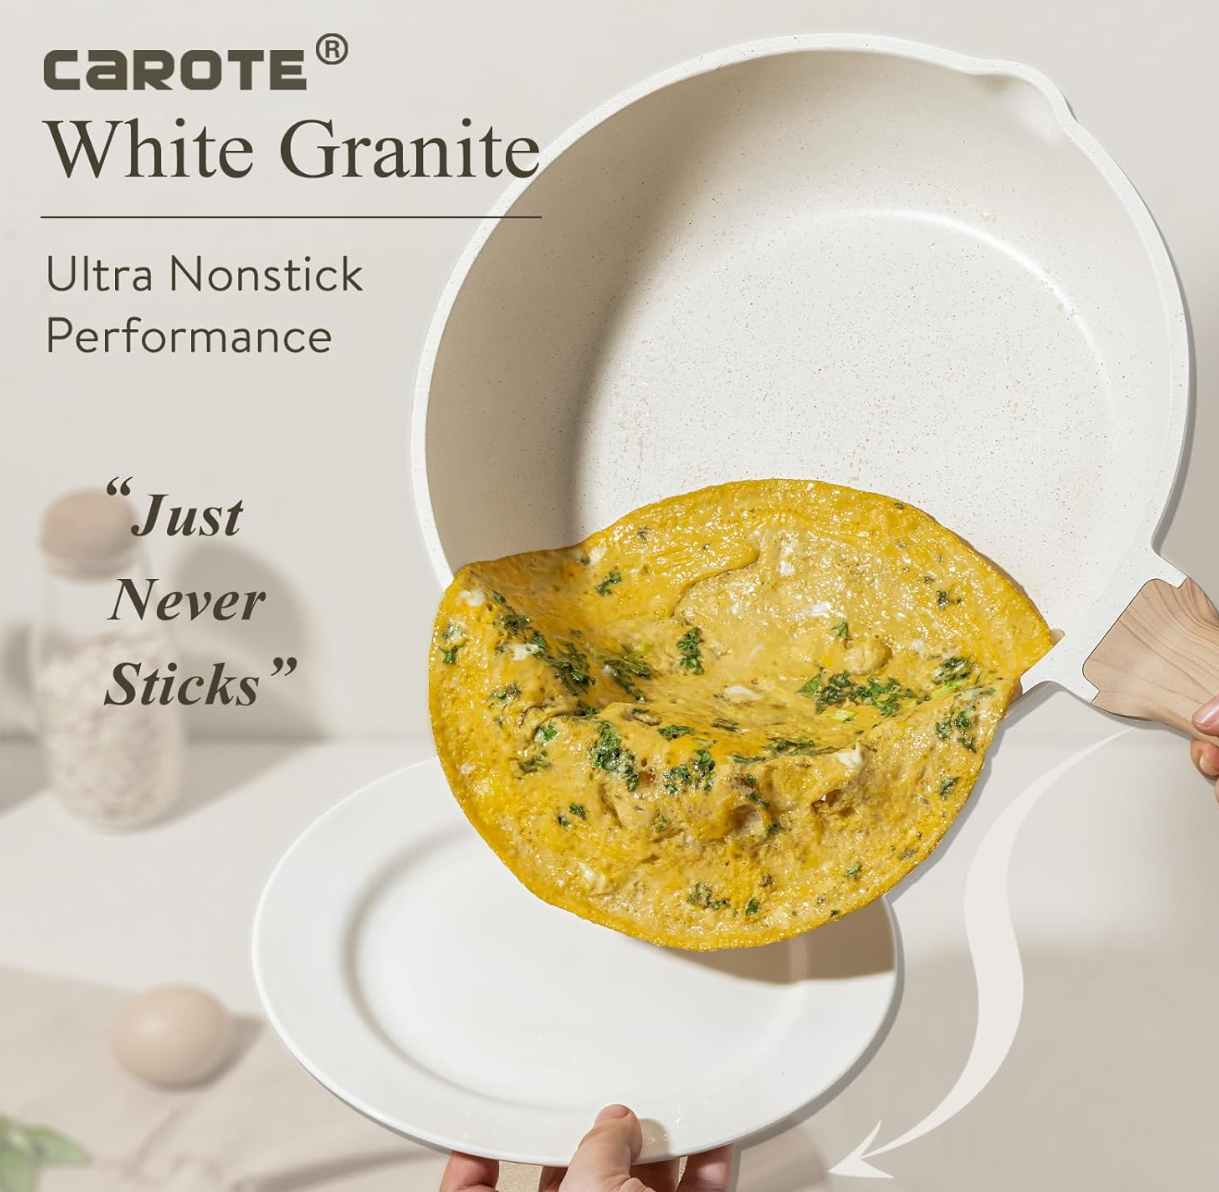 Carote 10 Piece Nonstick Cookware Set